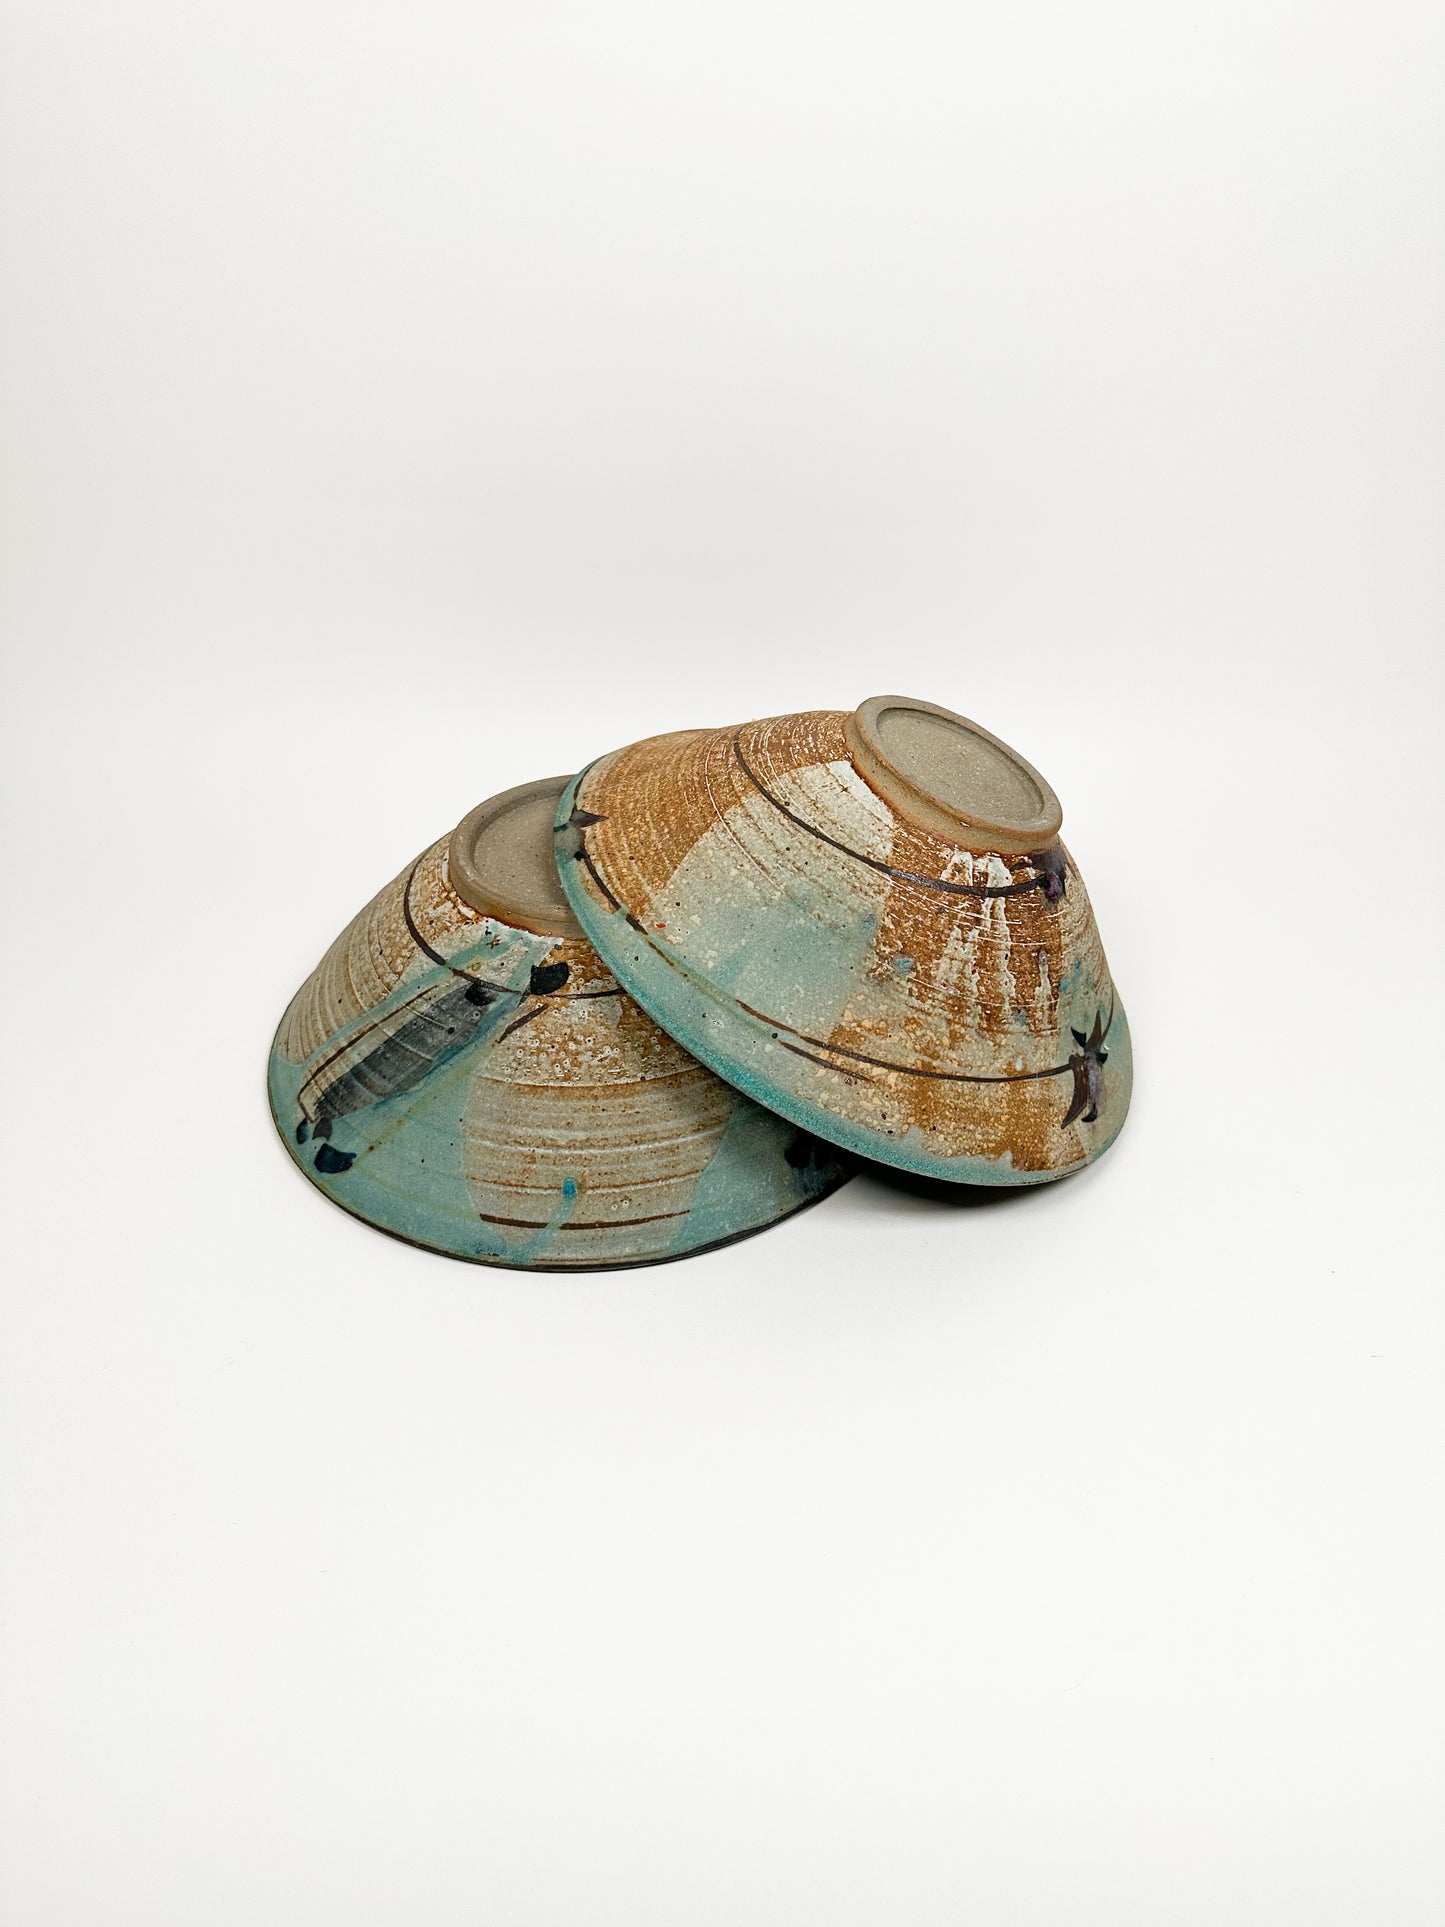 Handmade Ceramic Bowl Set